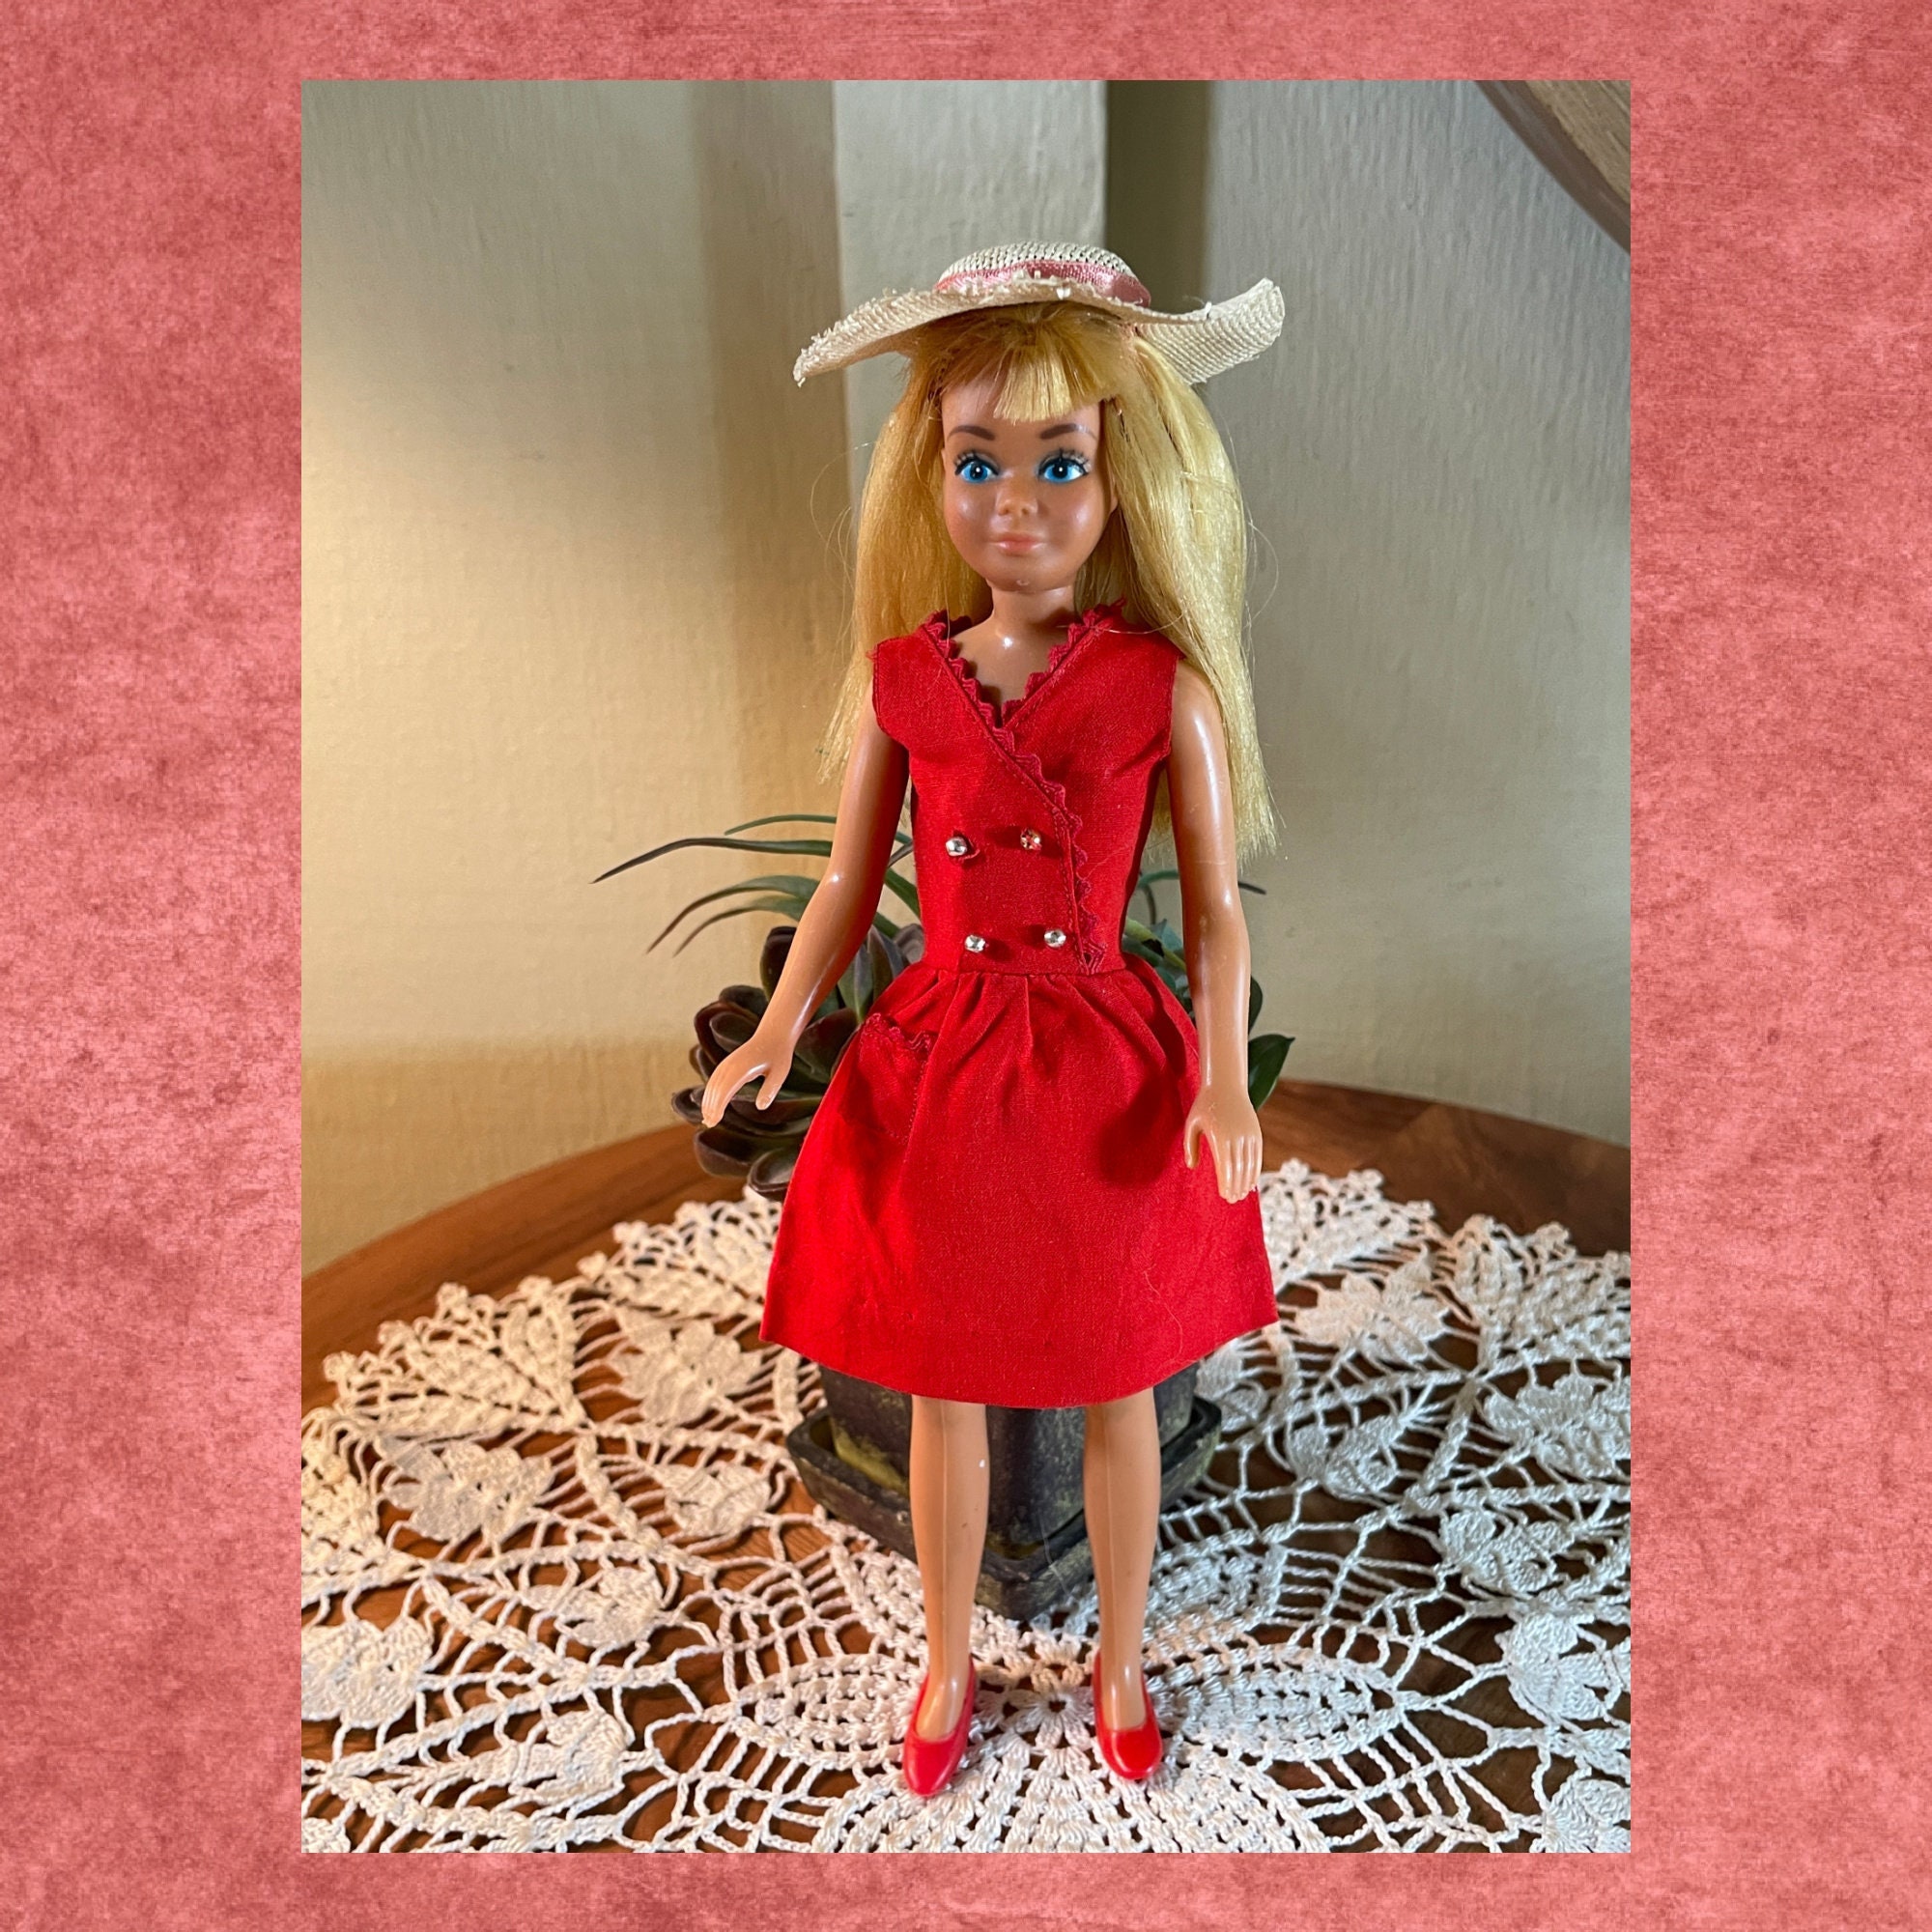 1964 Barbie Doll Little Sister Skipper Electric Drawing Set in Box - Ruby  Lane